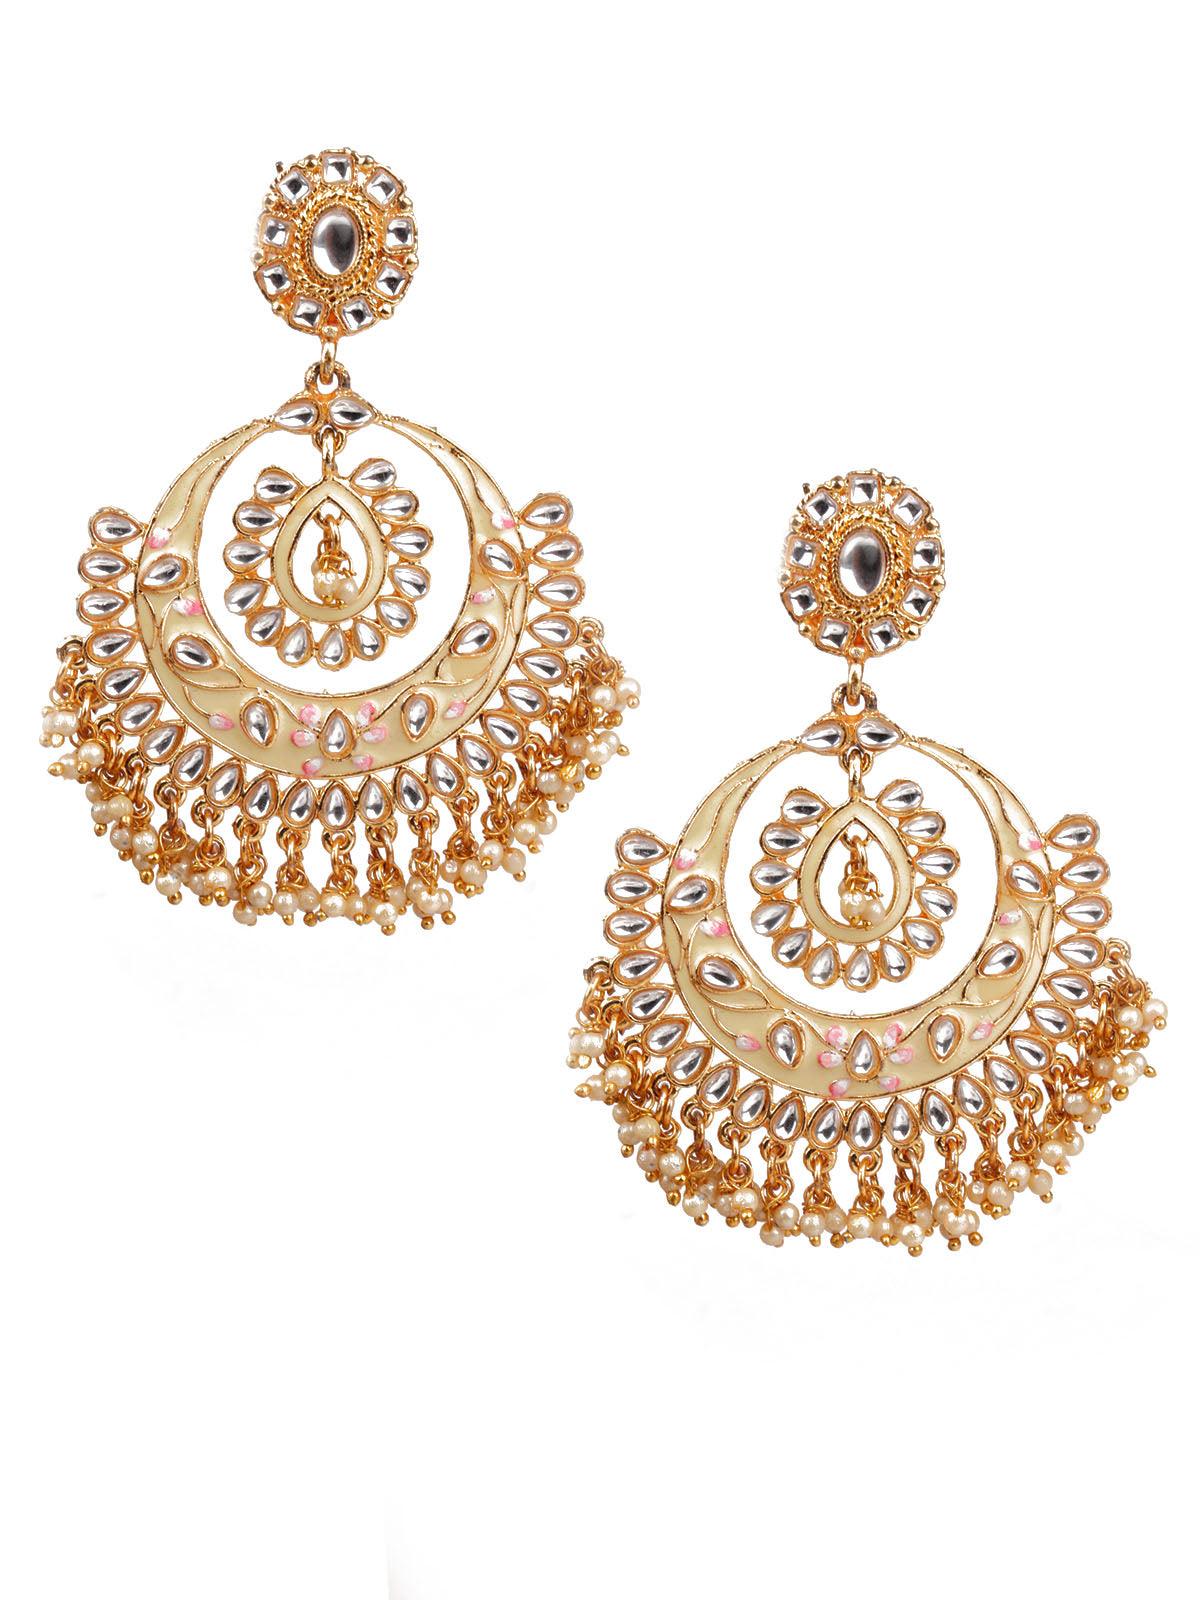 Women's Designer Gold Chandbali Earrings - Odette